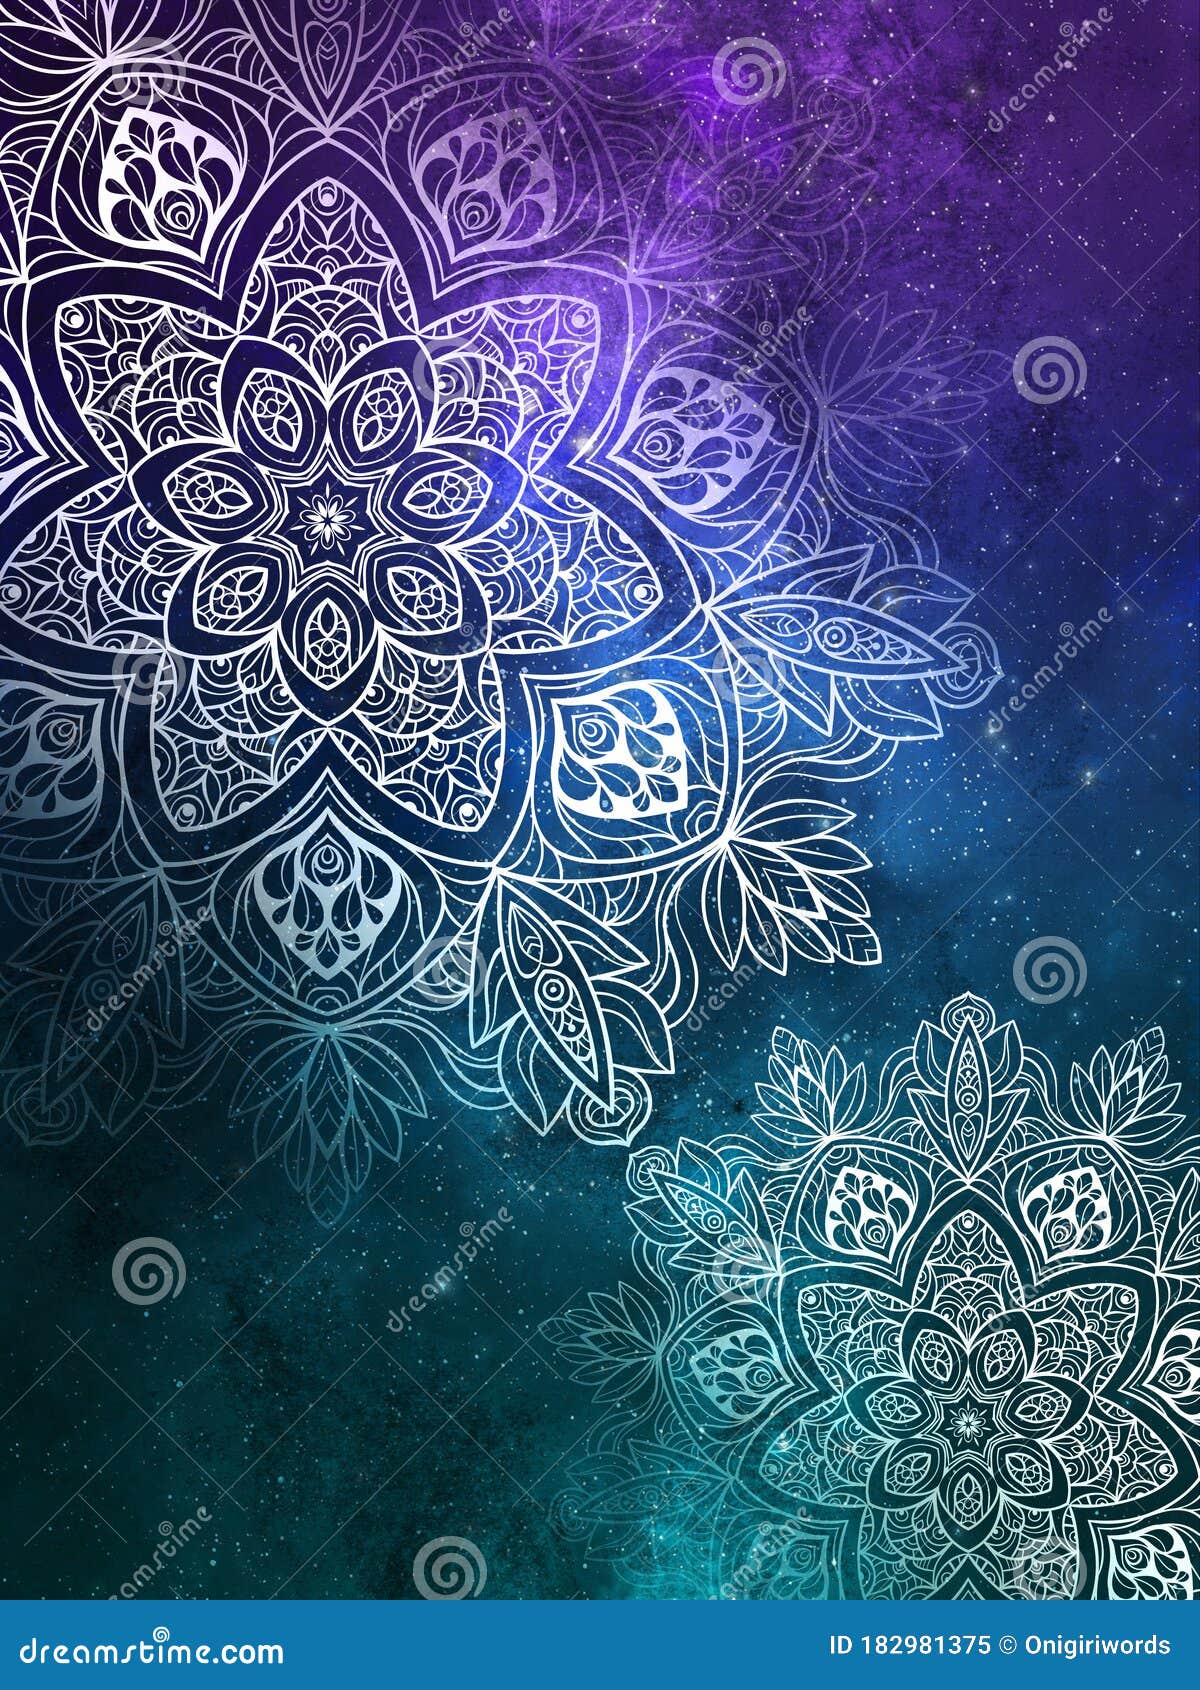 Mandala Wallpaper Decoration Stock Illustration - Illustration of